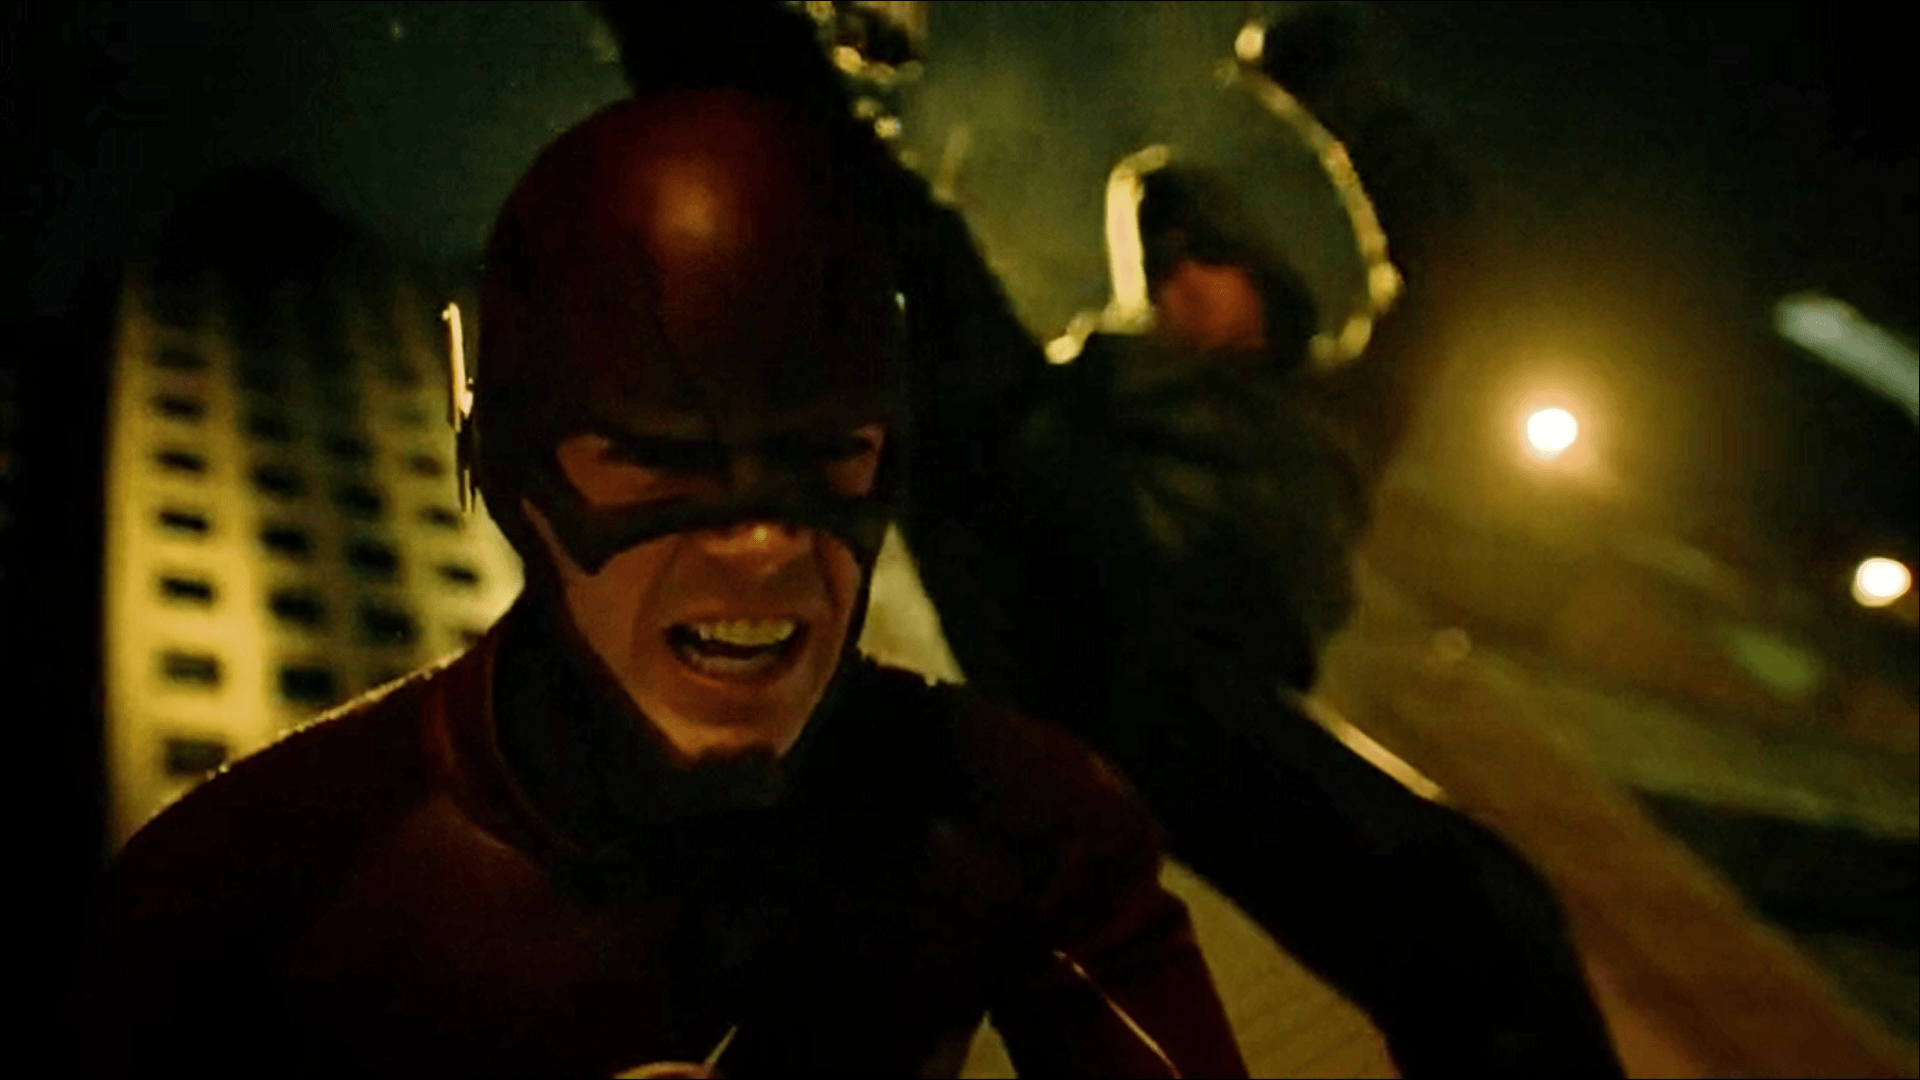 The Flash episode 8: Flash vs Arrow Discussion